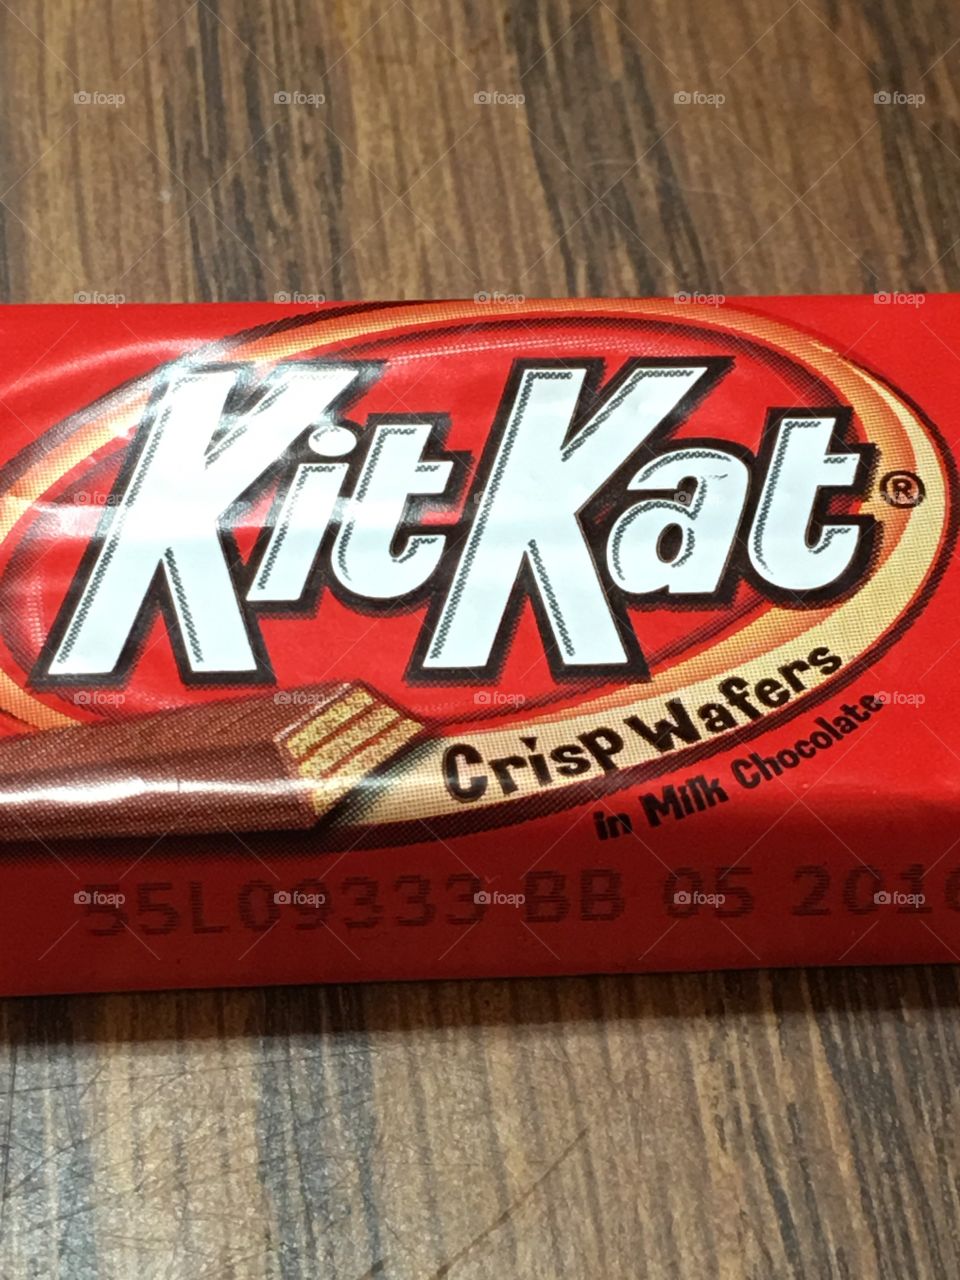 Kit Kat bar